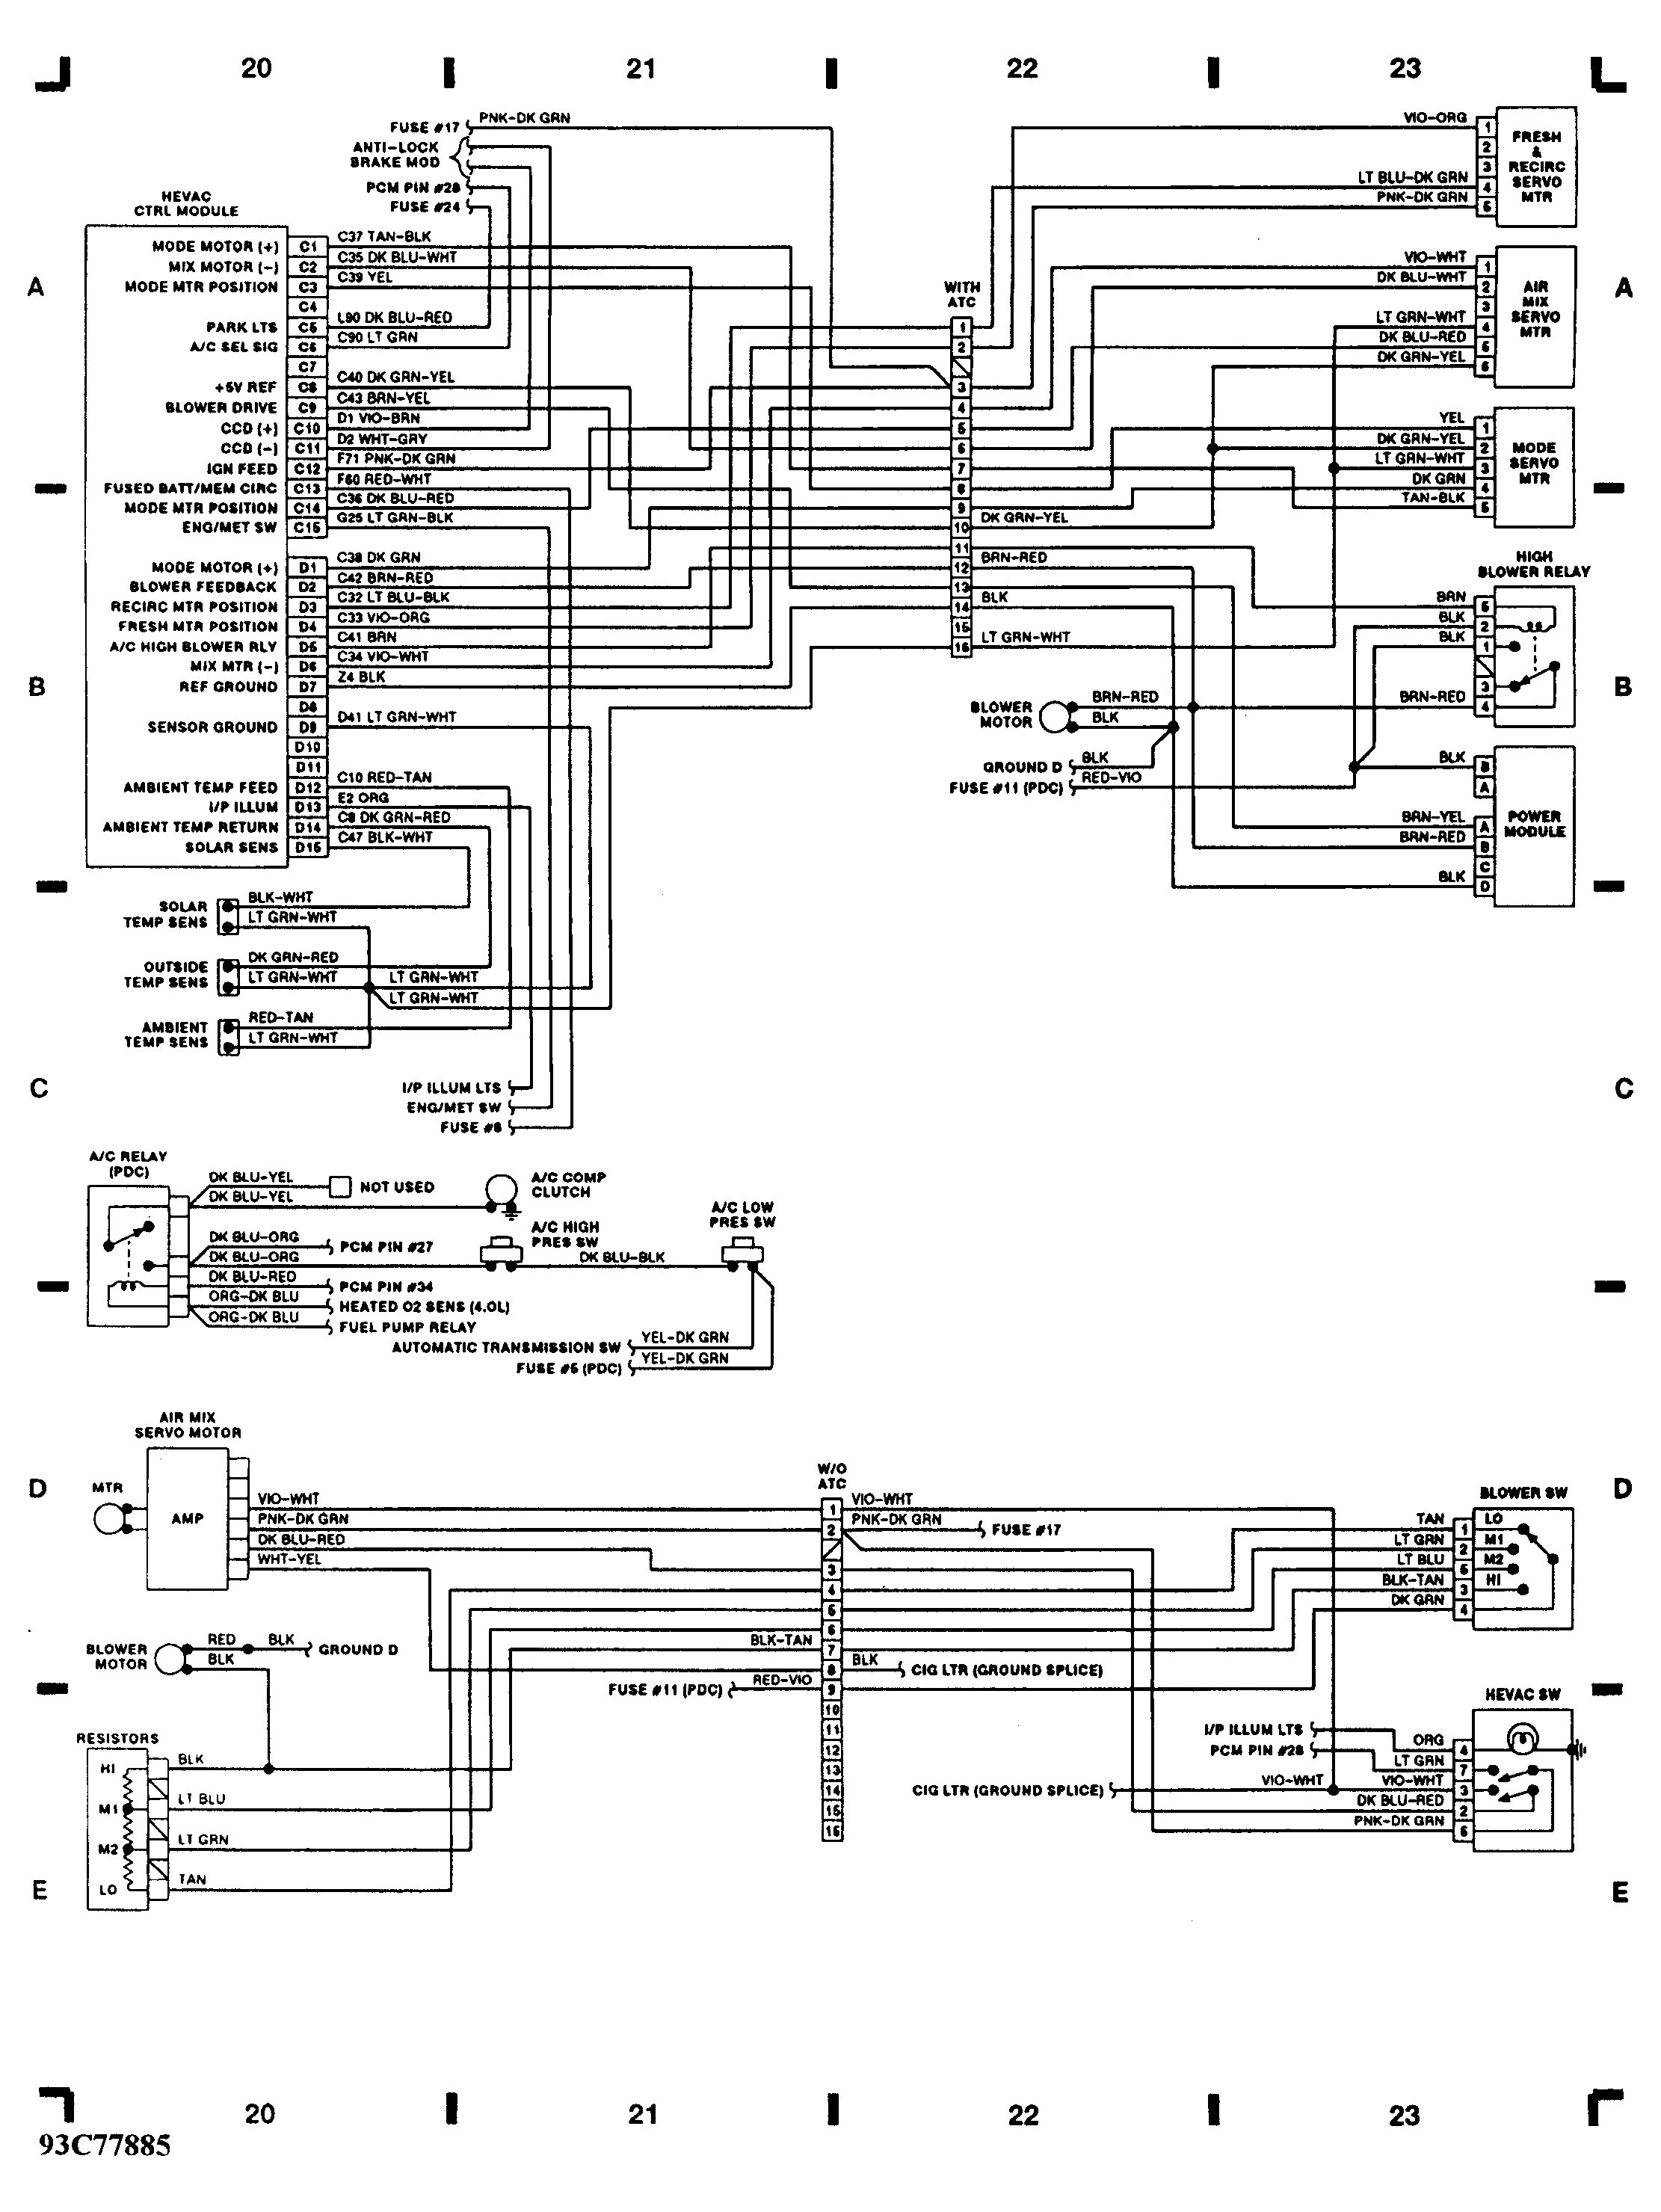 polaris rzr wiring diagram wiring diagram u2022 rh msblog co polaris rzr 800 wiring diagram polaris